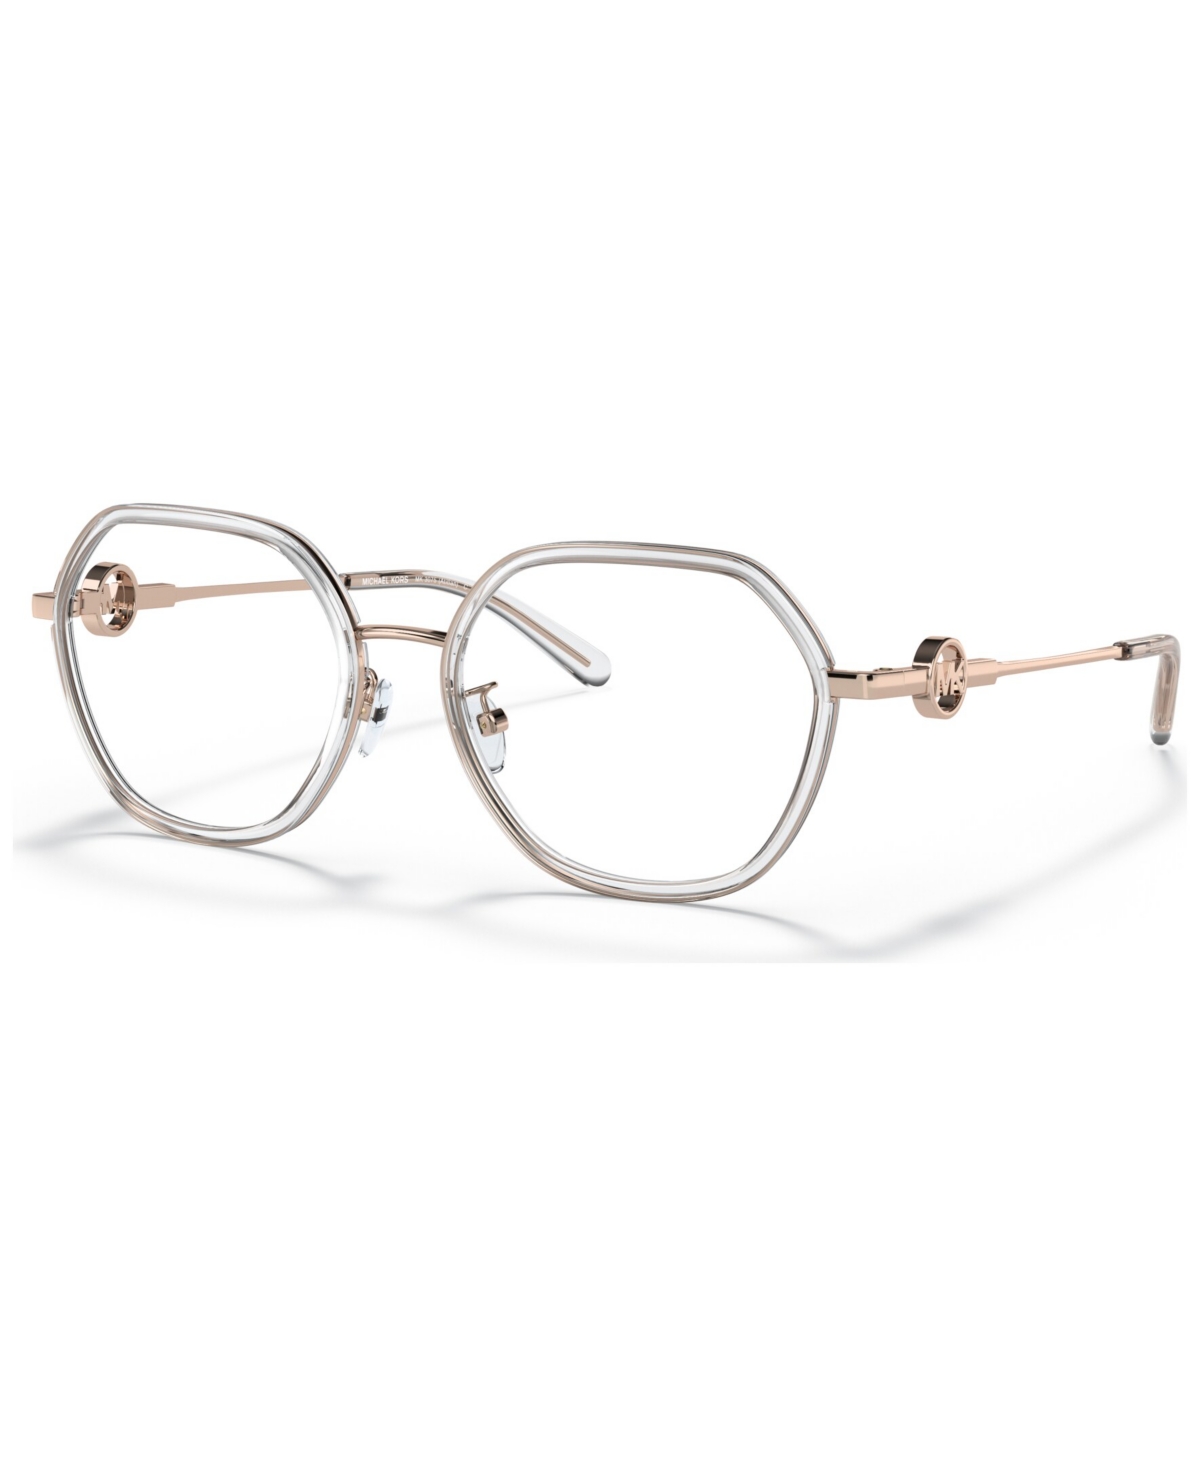 Women's Irregular Eyeglasses, MK305751-o - Clear